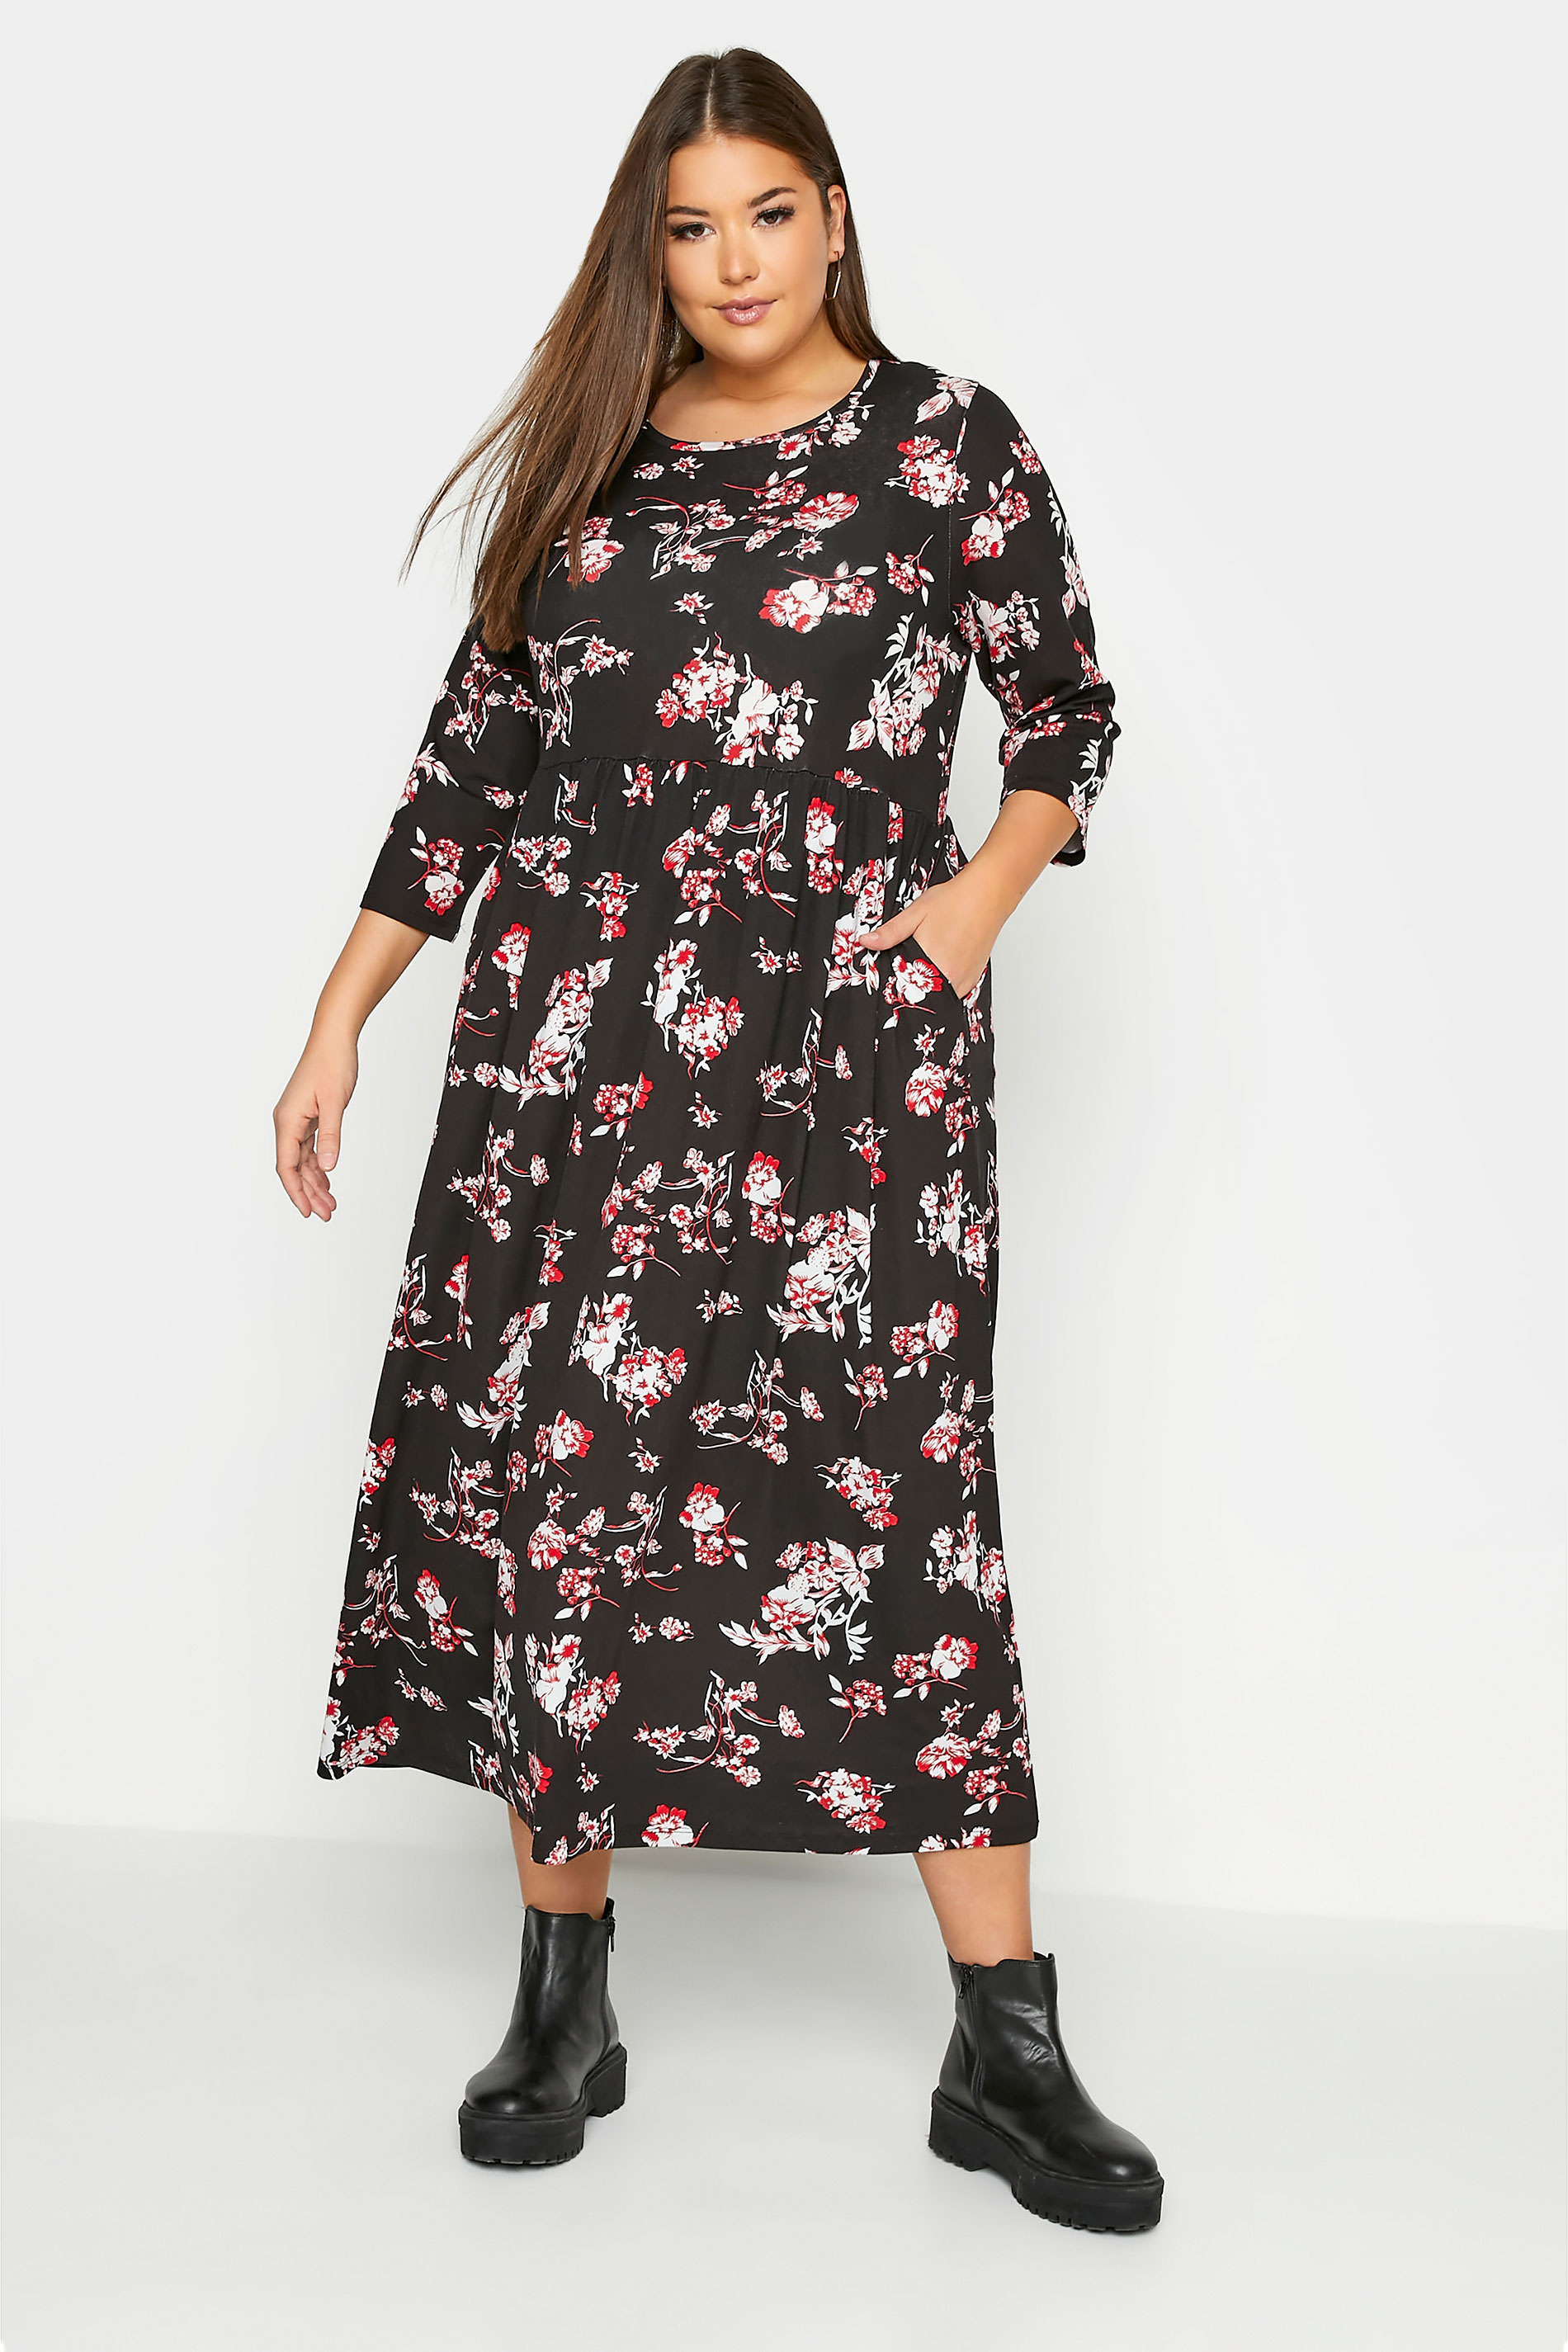 Plus Size Black Floral Print Pocket Dress | Yours Clothing 1